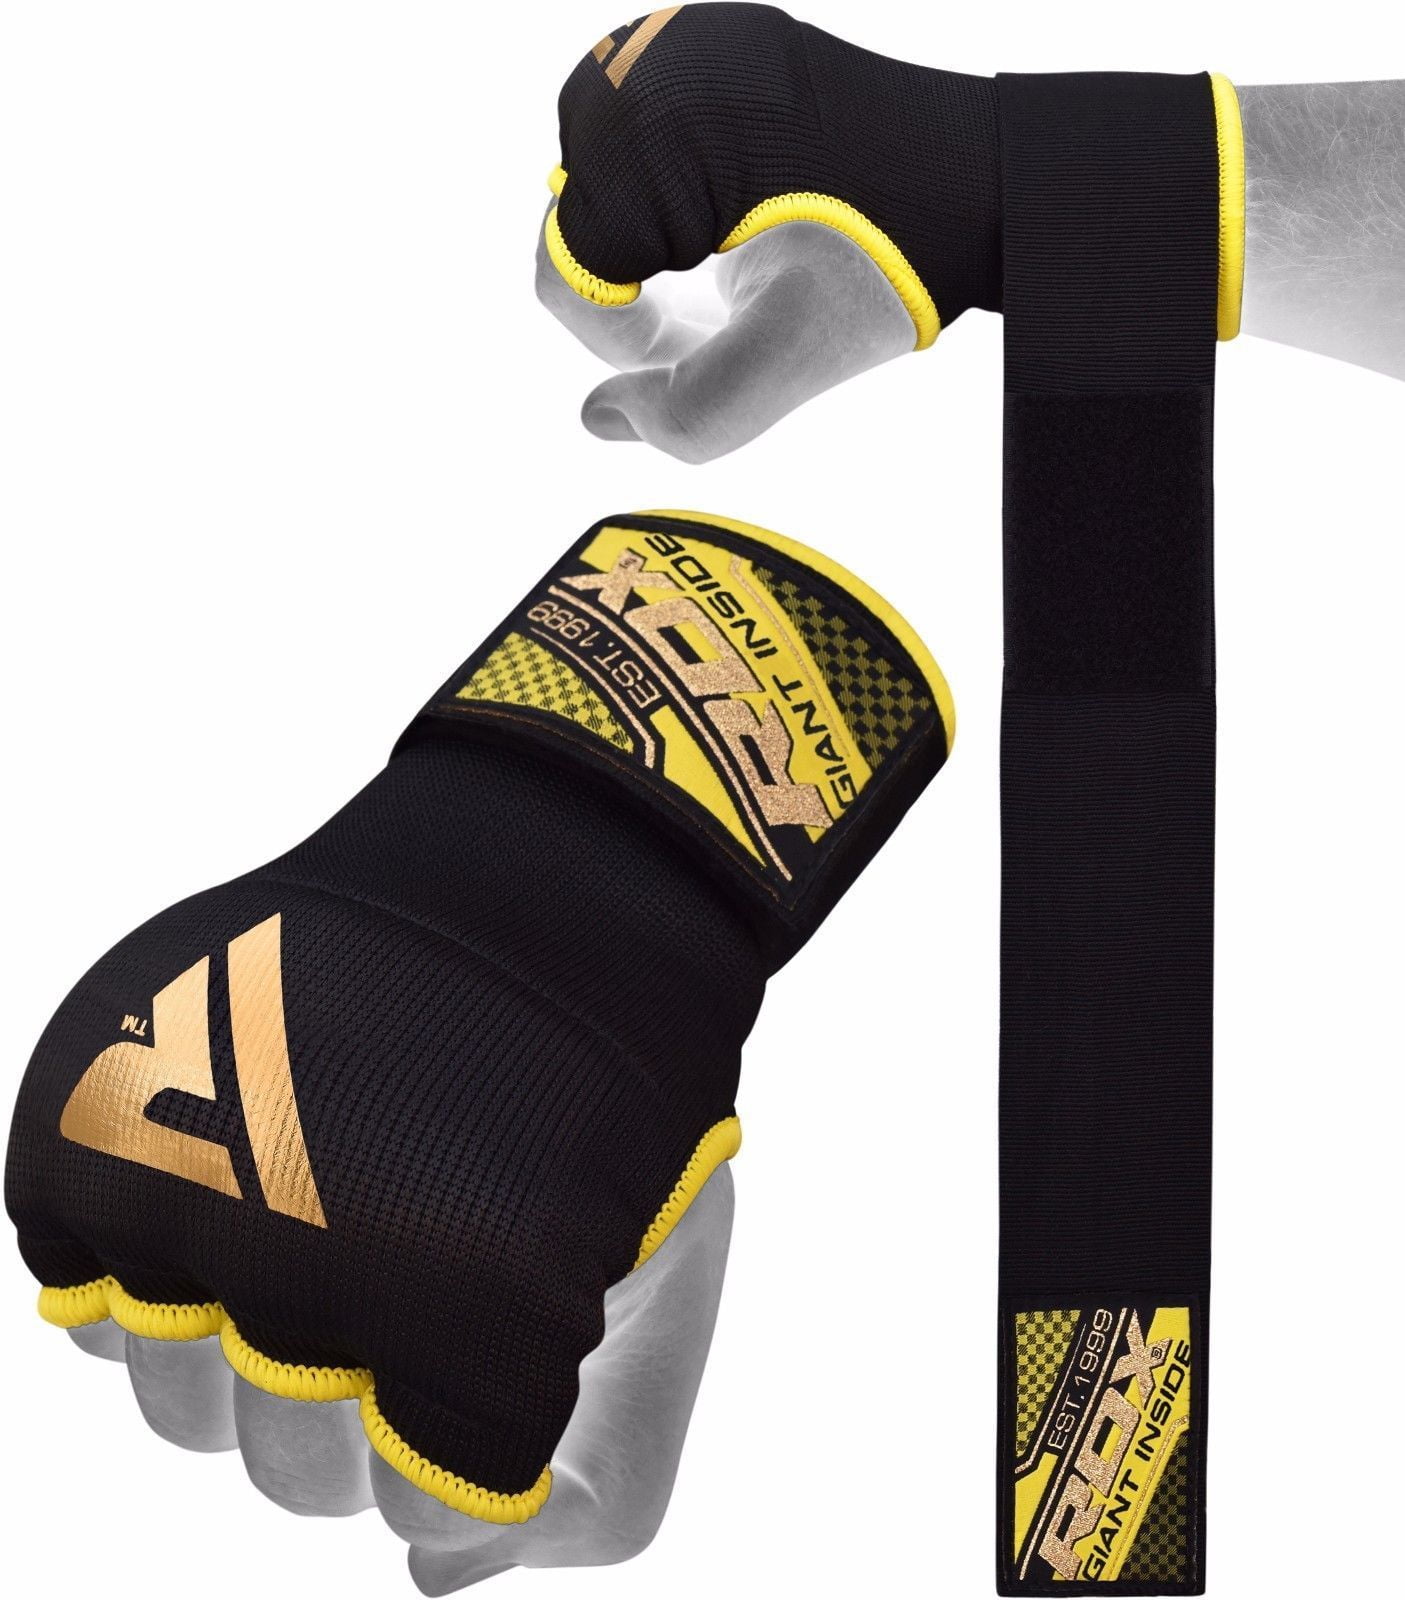 EXTRA LONG Hand Wraps Boxing MMA UFC Wrist Guards cotton Bandages gloves straps 